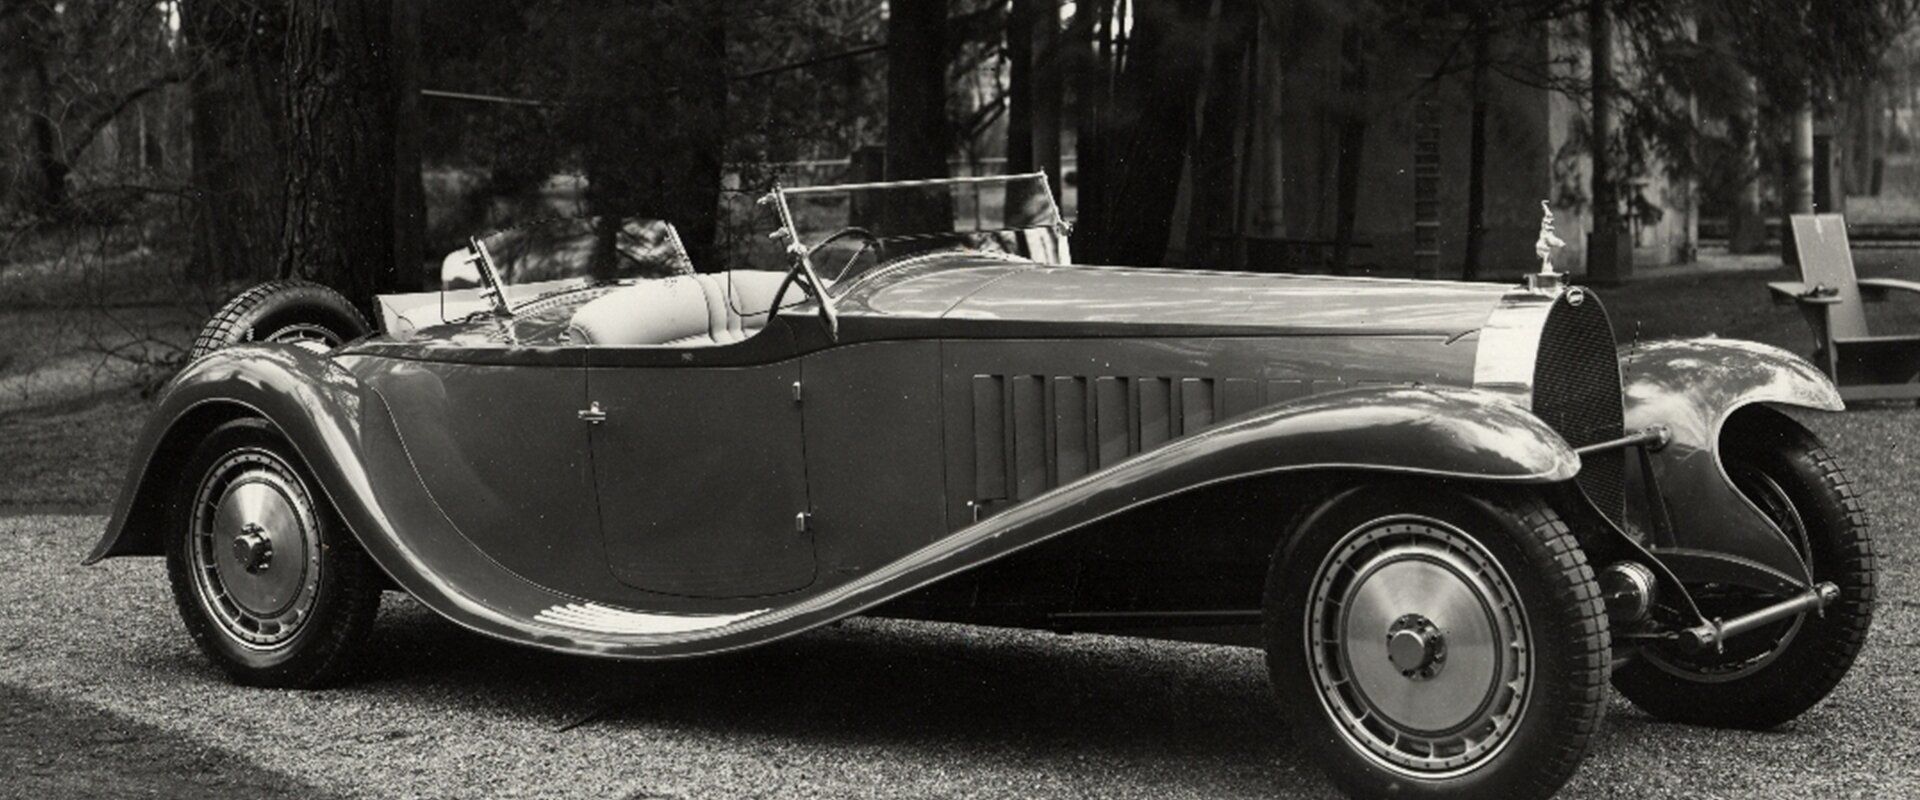 Bugatti Type 41 La Royale - Imagen en blanco y negro